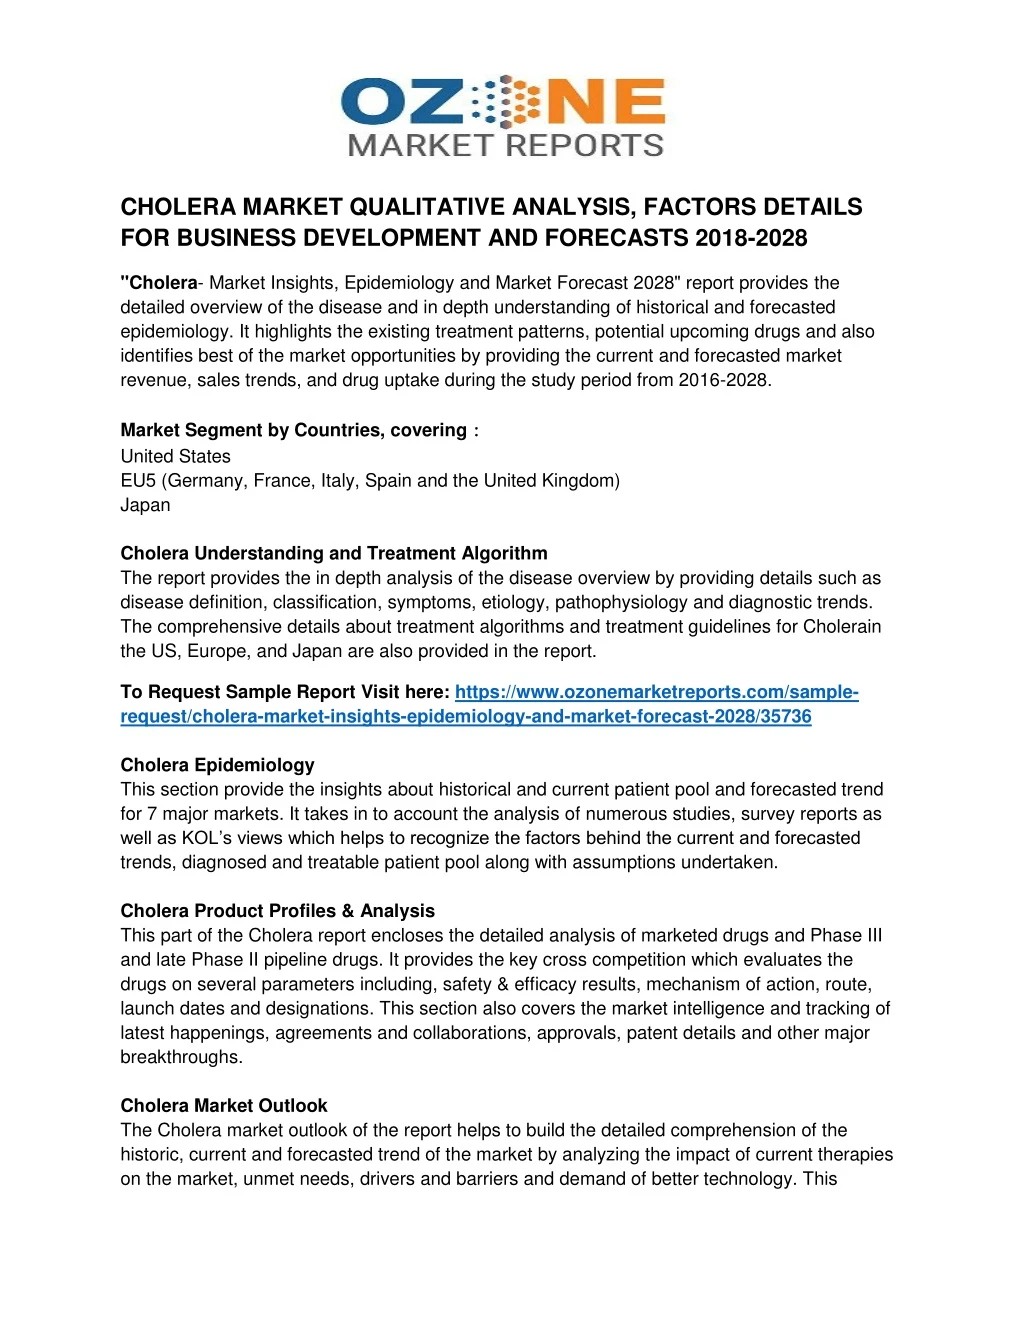 cholera market qualitative analysis factors